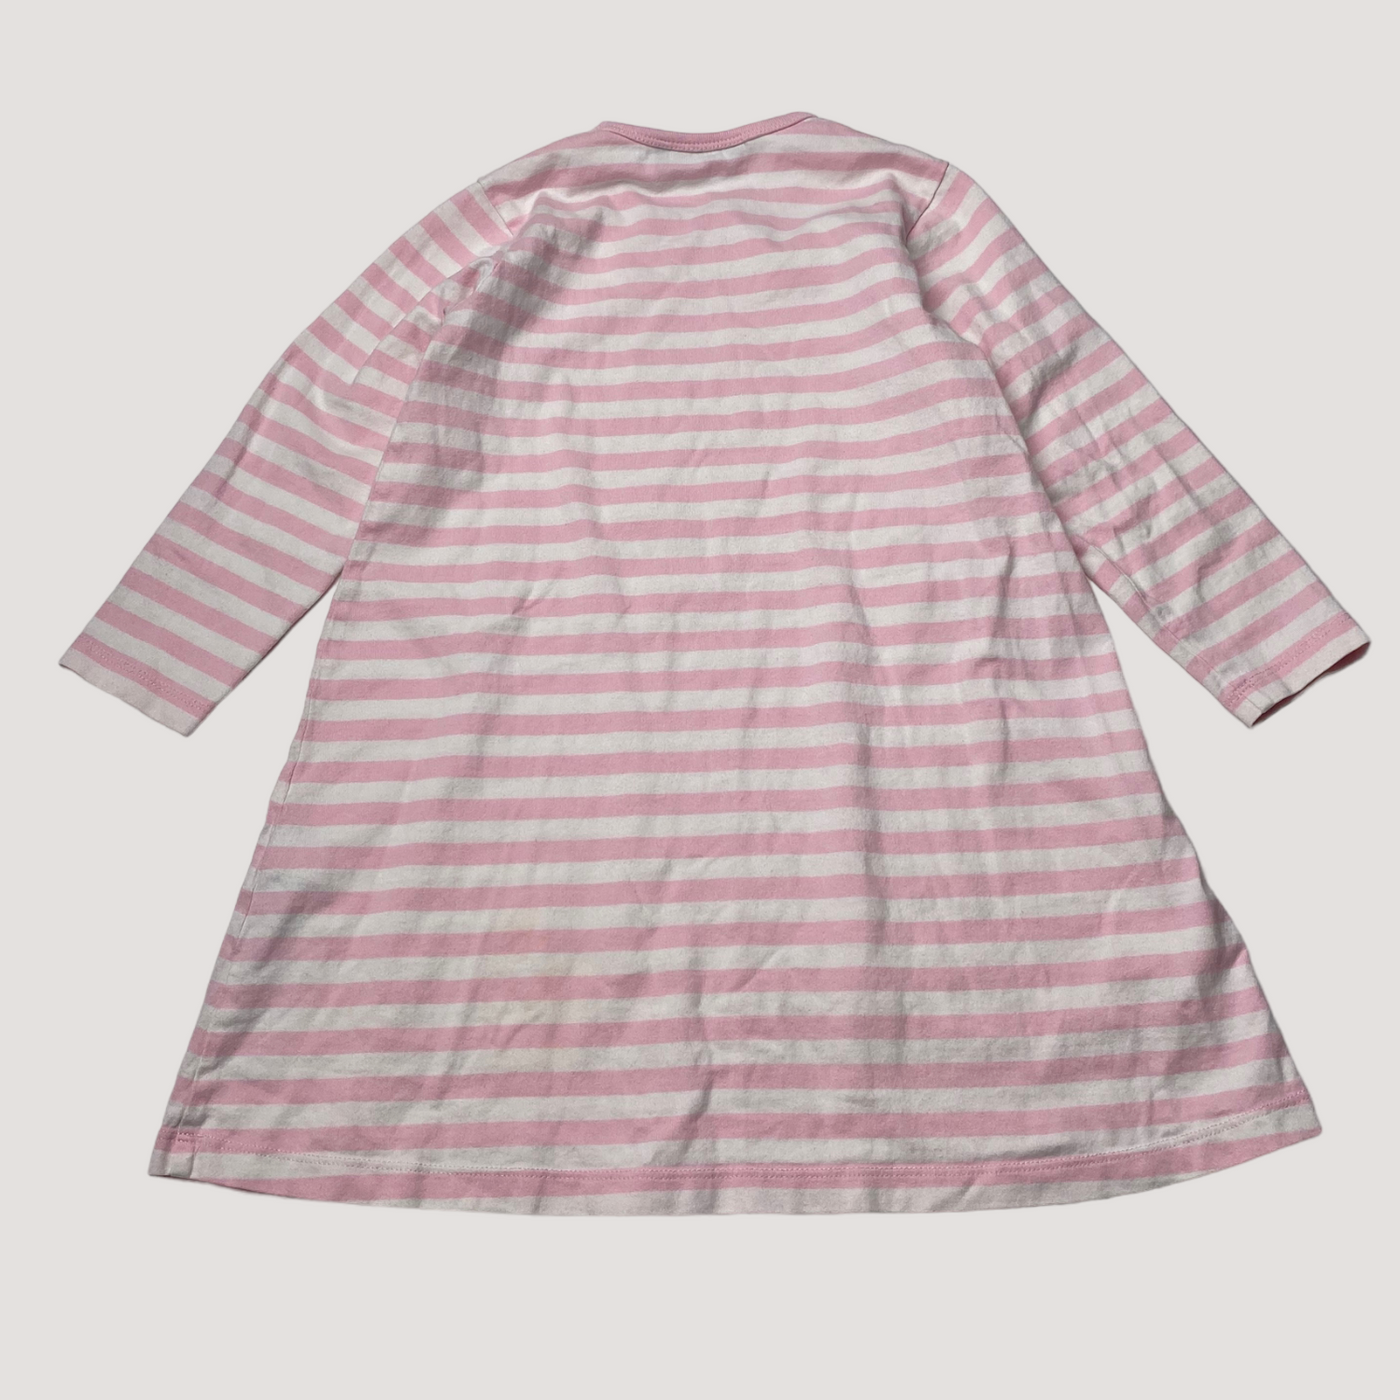 Marimekko stripe dress, pink/white | 104/110cm